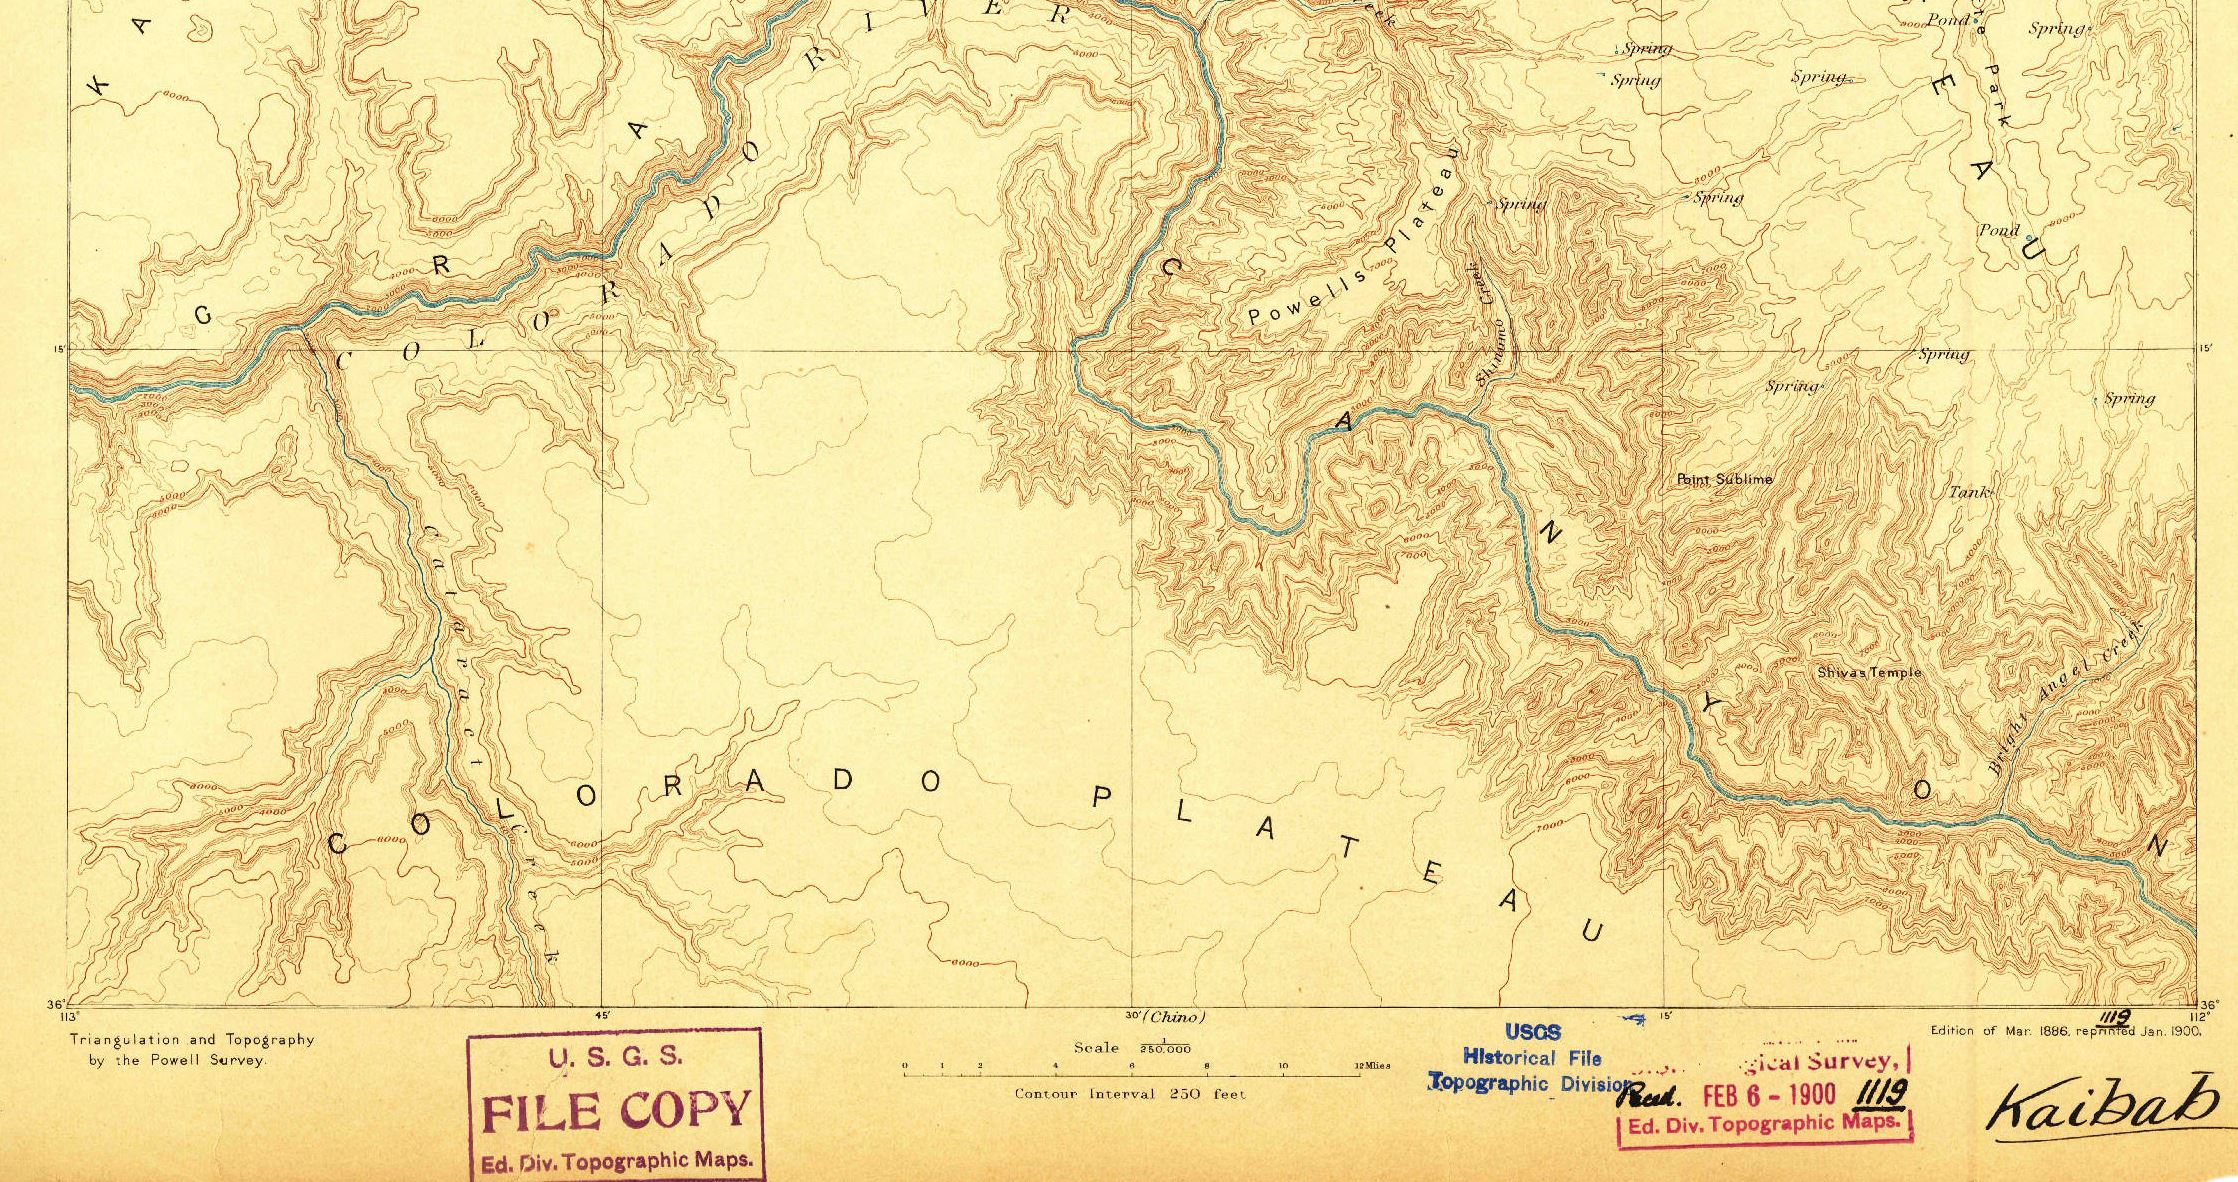 USGS Topographic Map